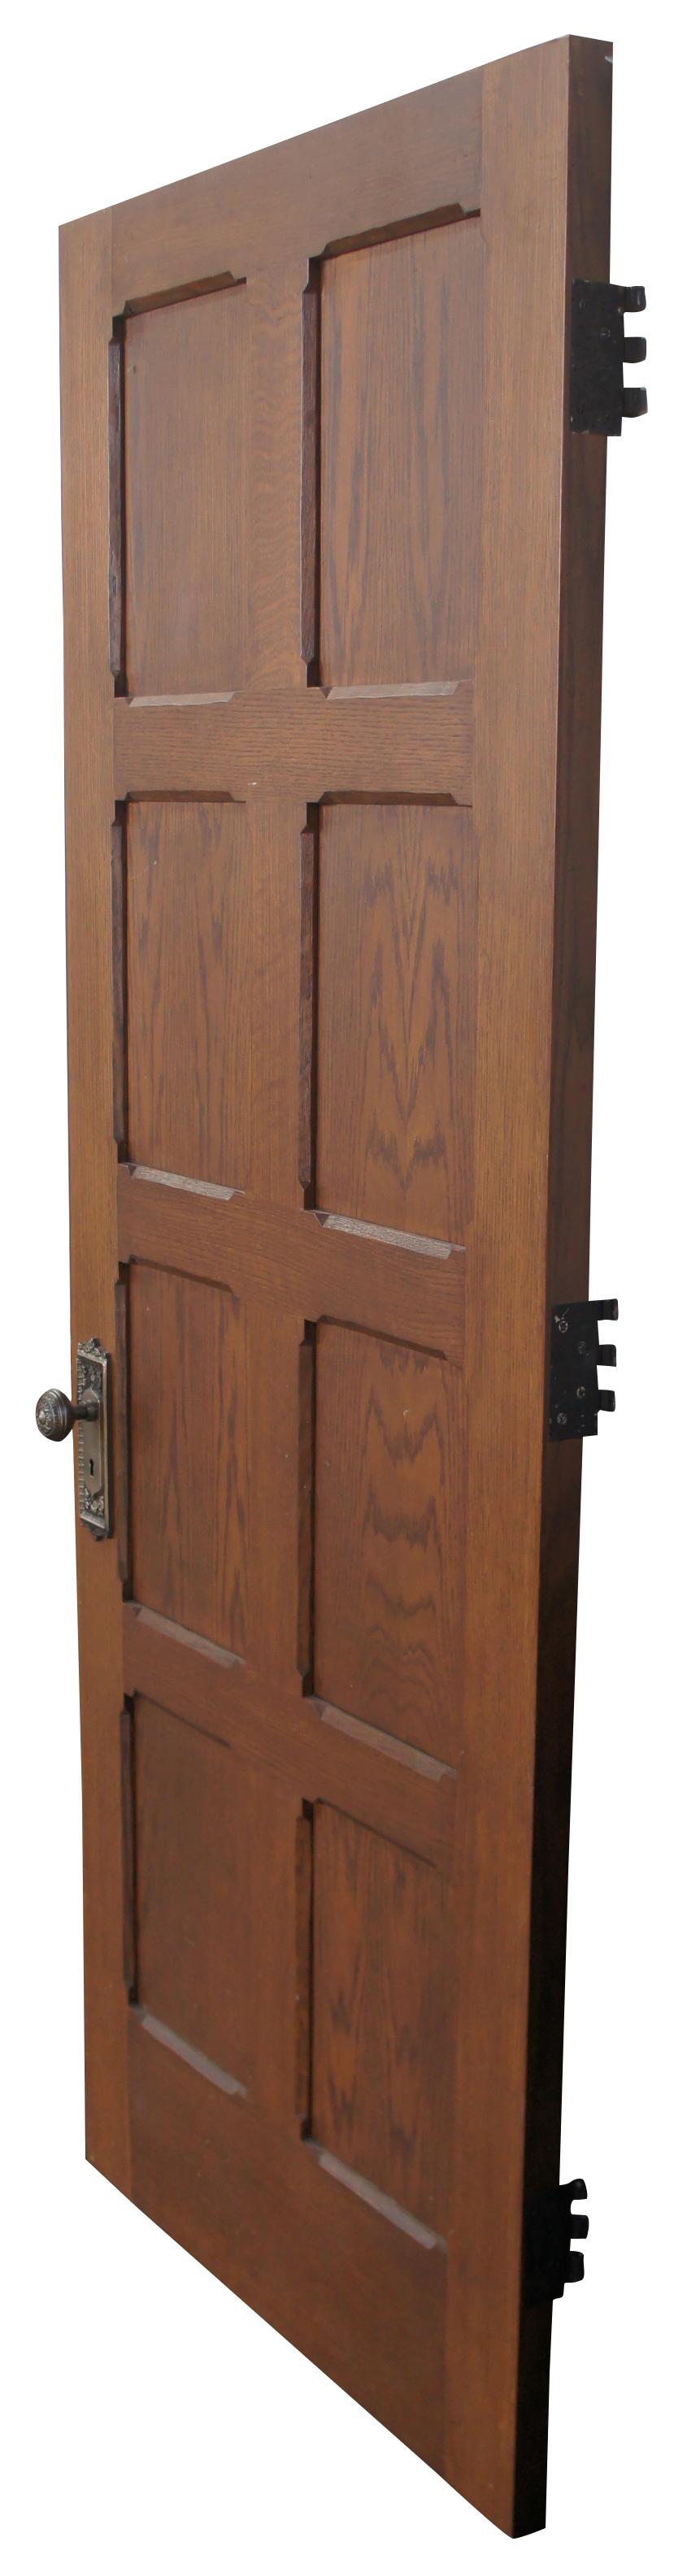 Spanish Colonial Vintage Reclaimed Spanish Revival Solid Oak Eight Panel Door